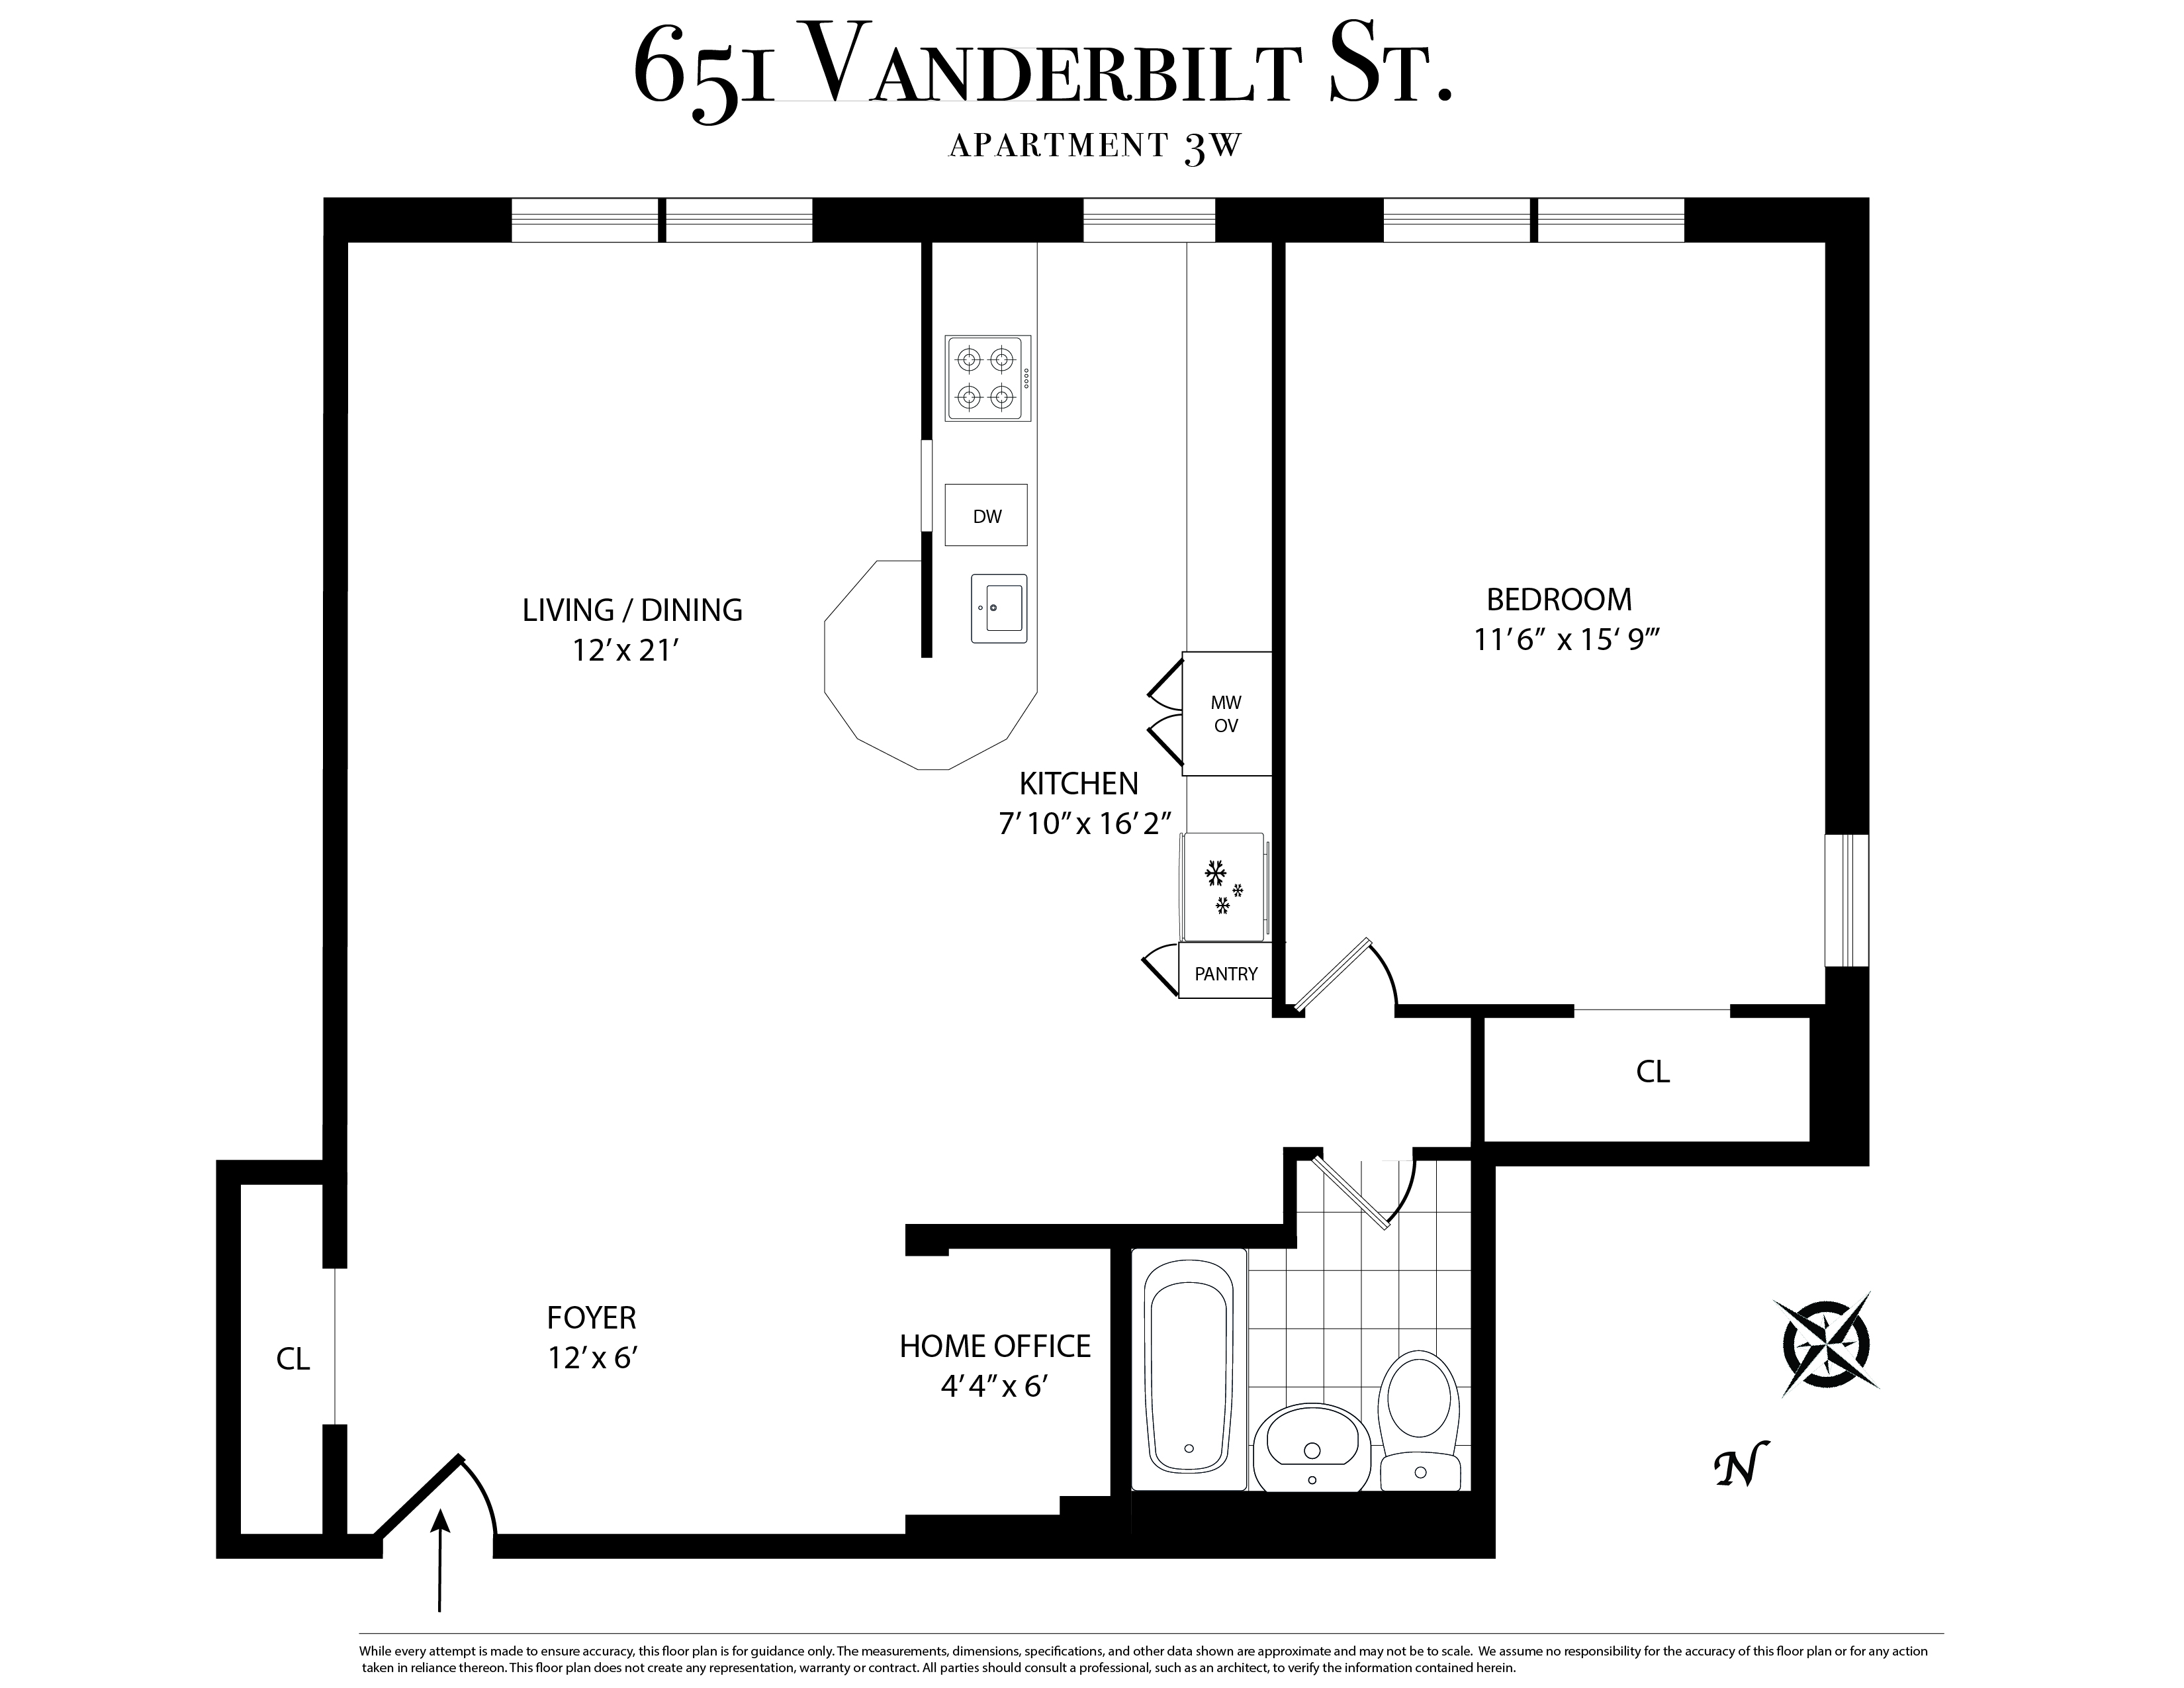 Floorplan of 651 Vanderbilt St